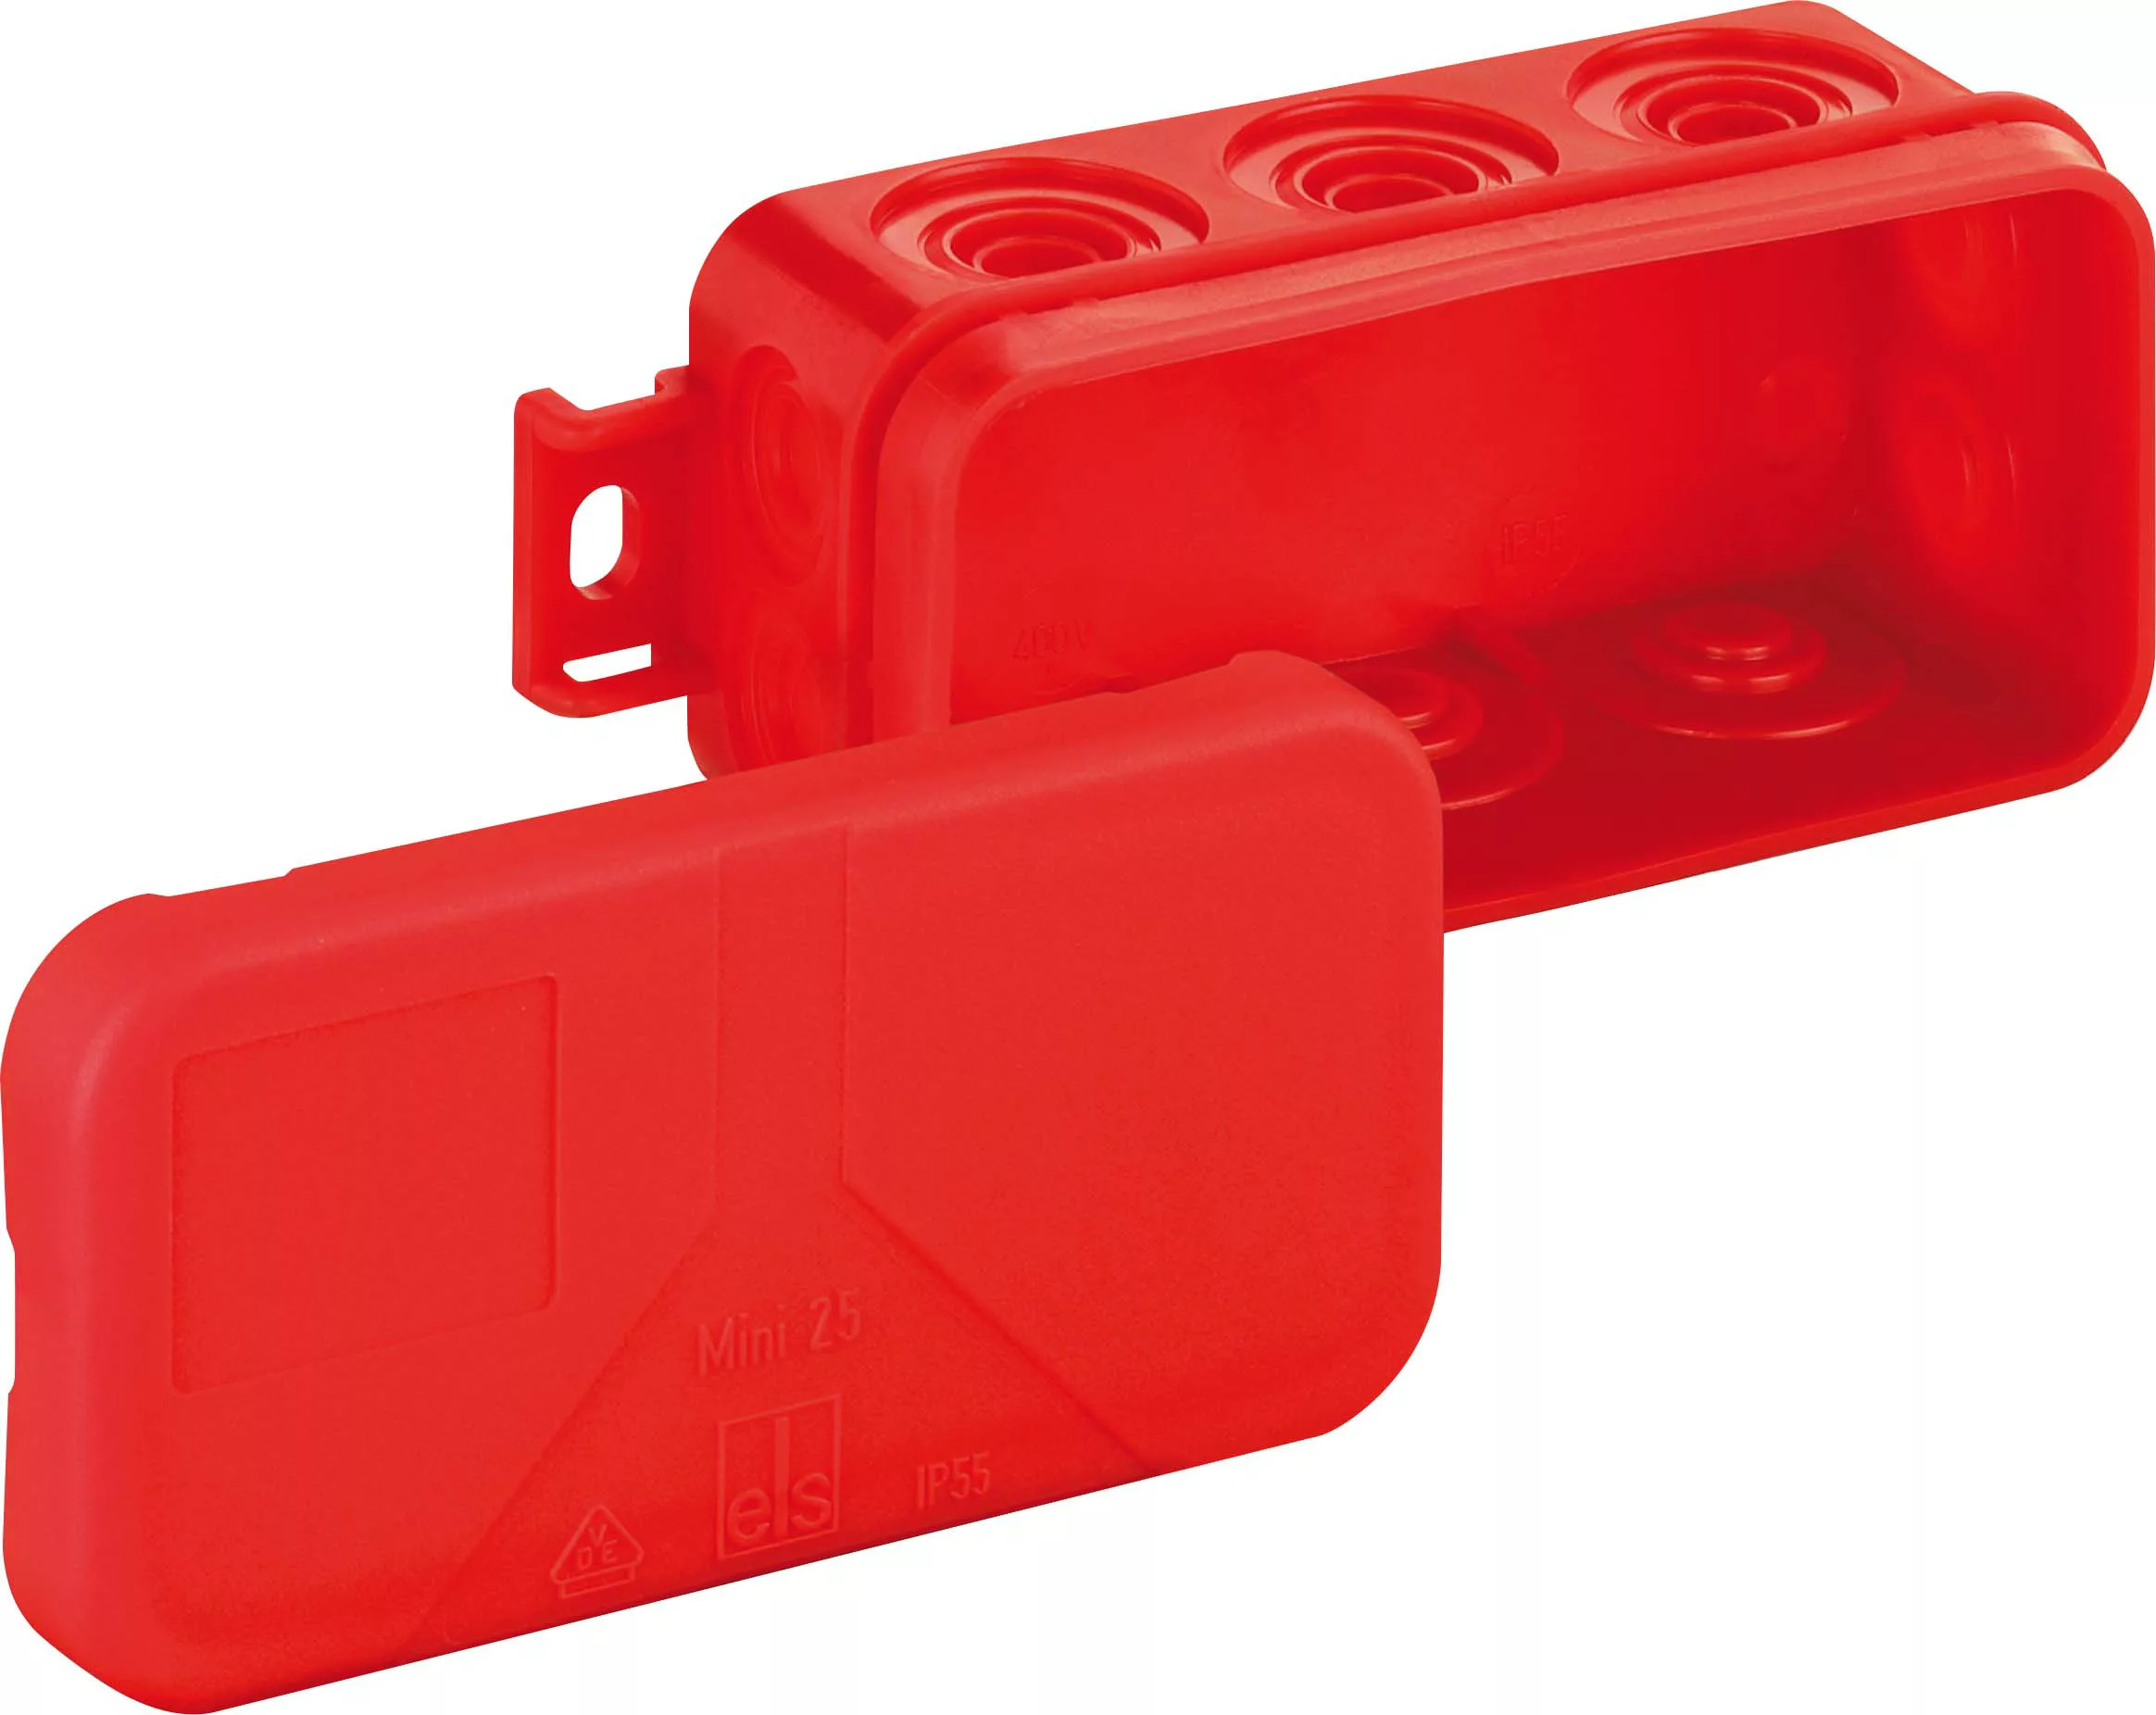 Spelsberg Verbindungsdose rot Mini 25 SB-L - 31070801 günstig online kaufen